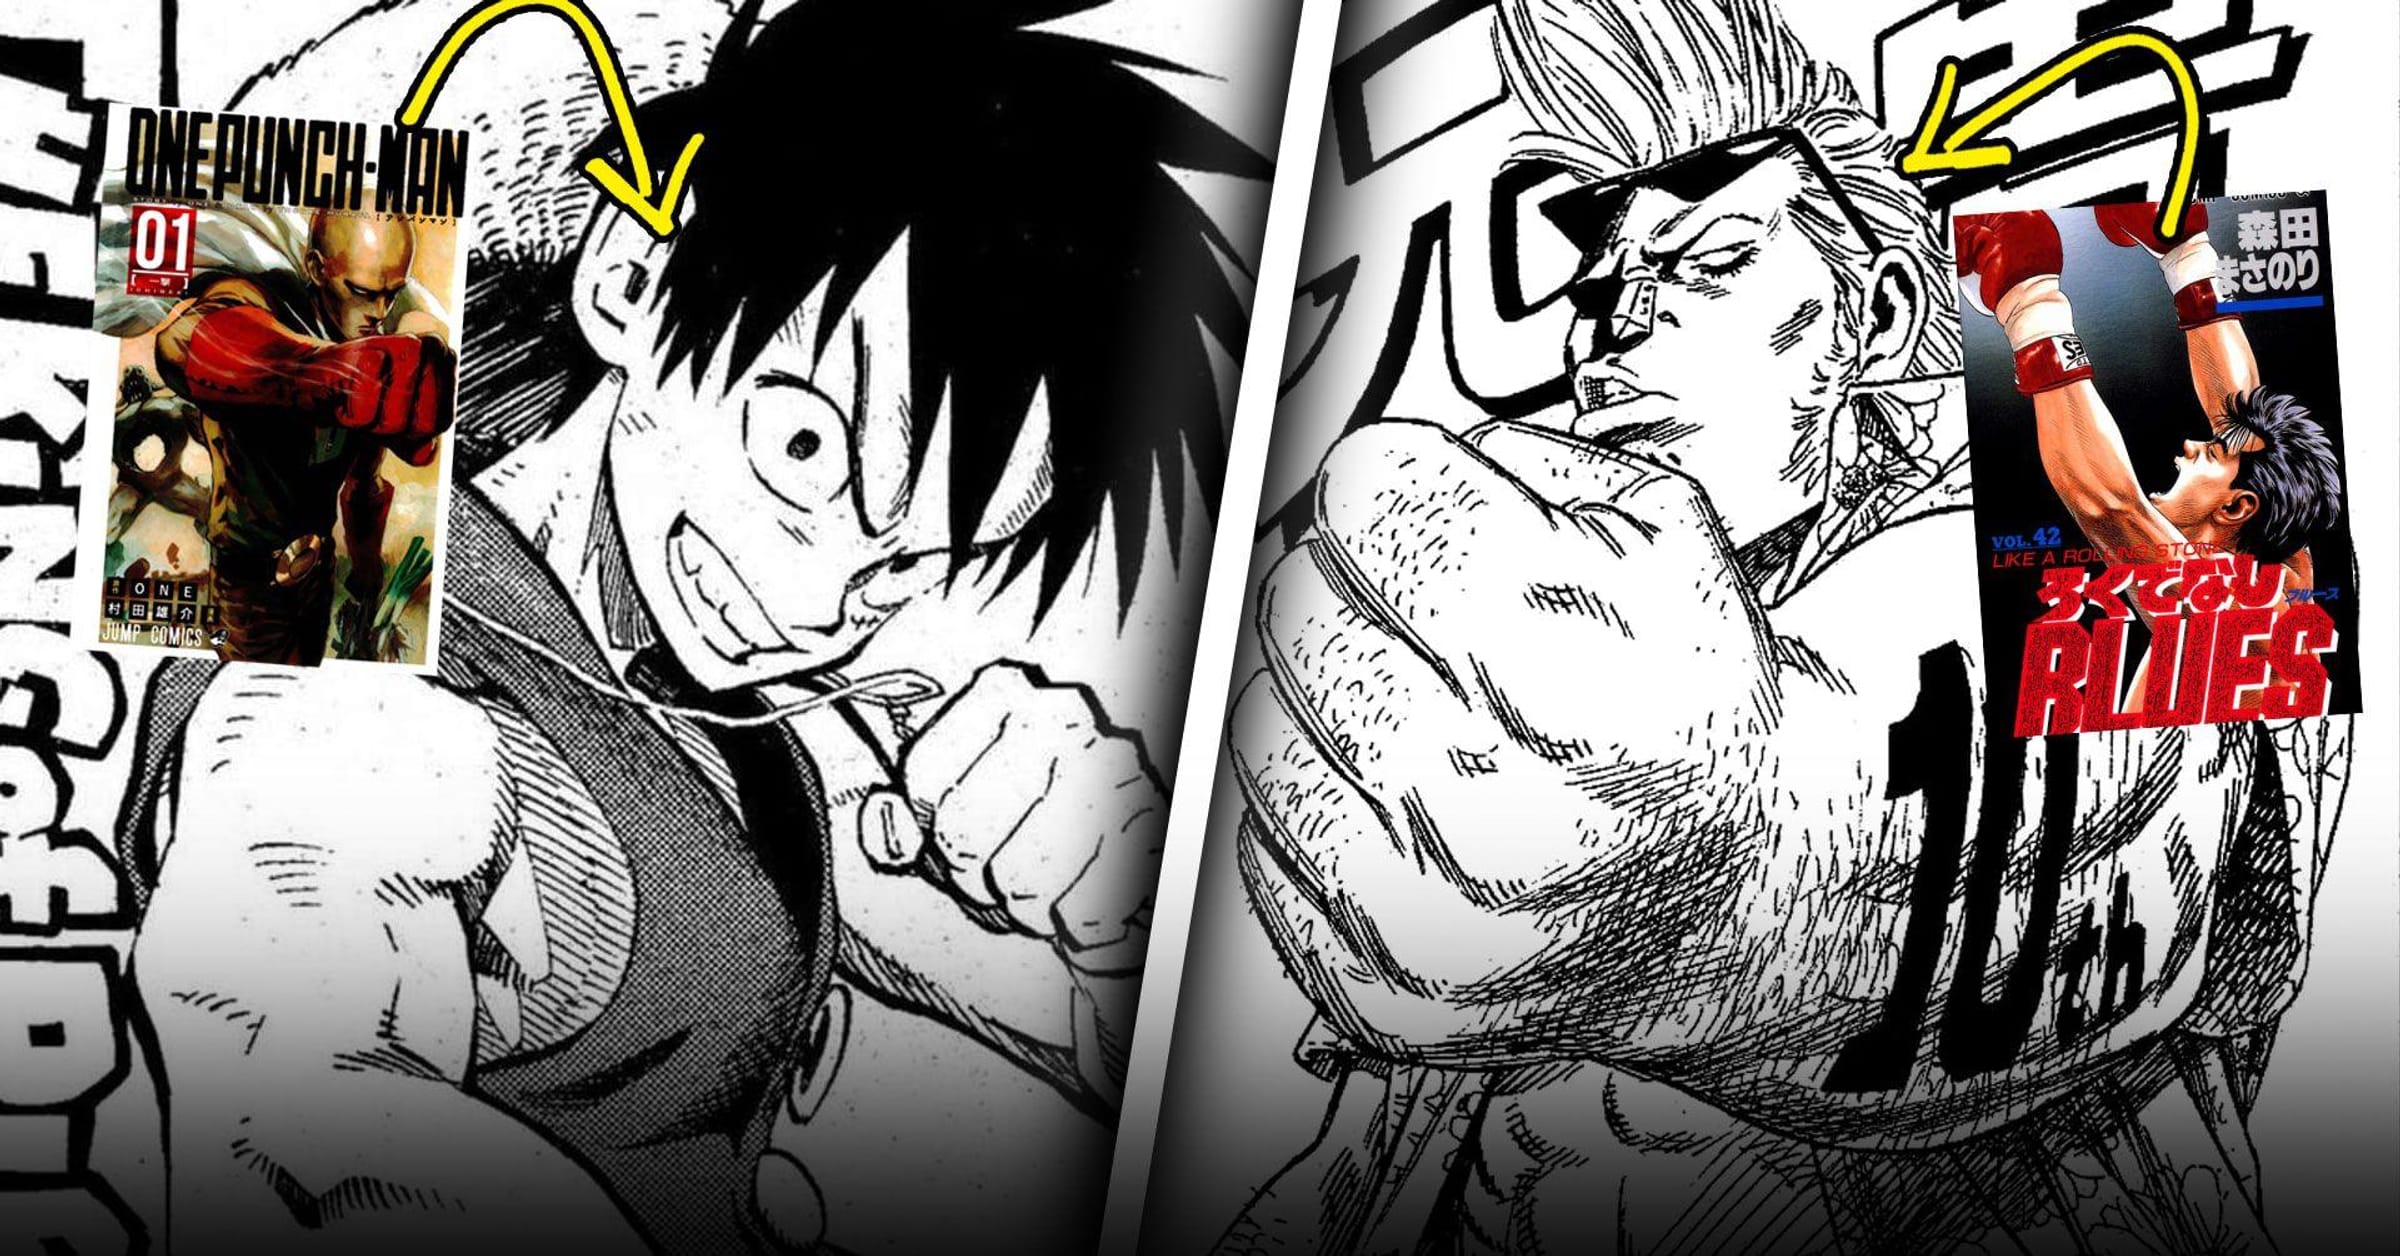 Drawing One Piece Anime, one piece, manga, fictional Character